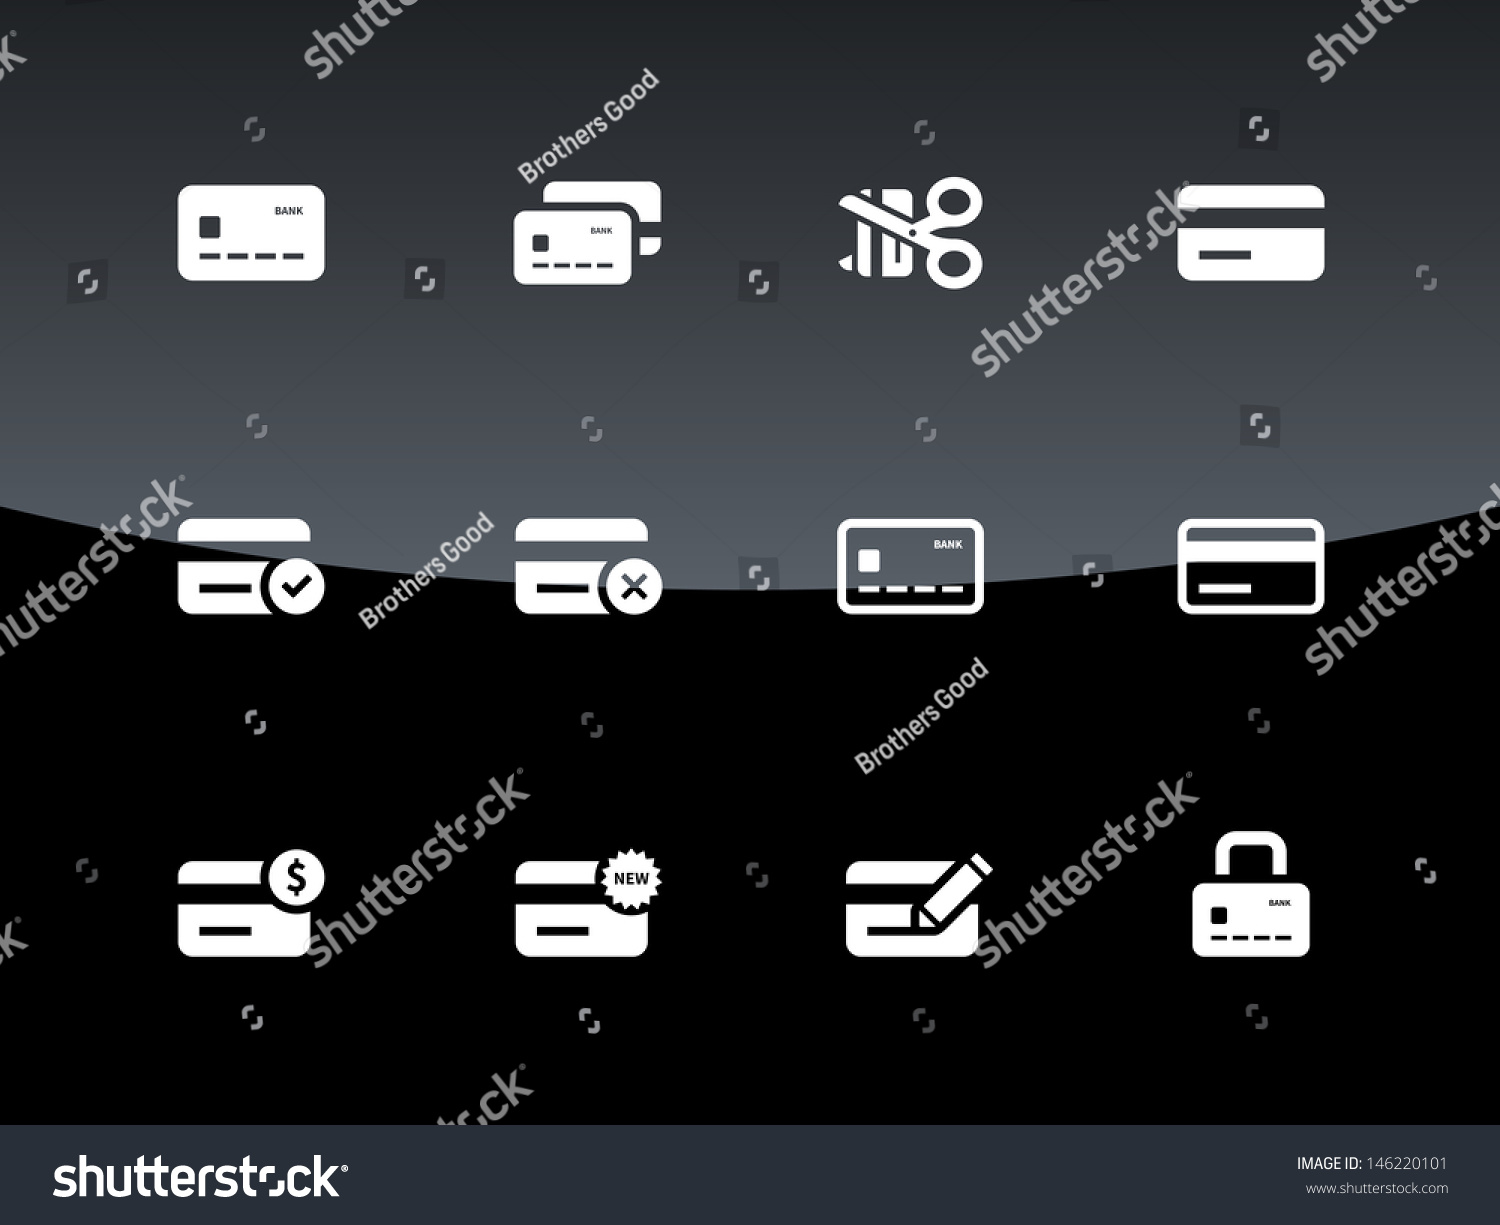 Credit Card Icons On Black Background. Vector Illustration. - 146220101